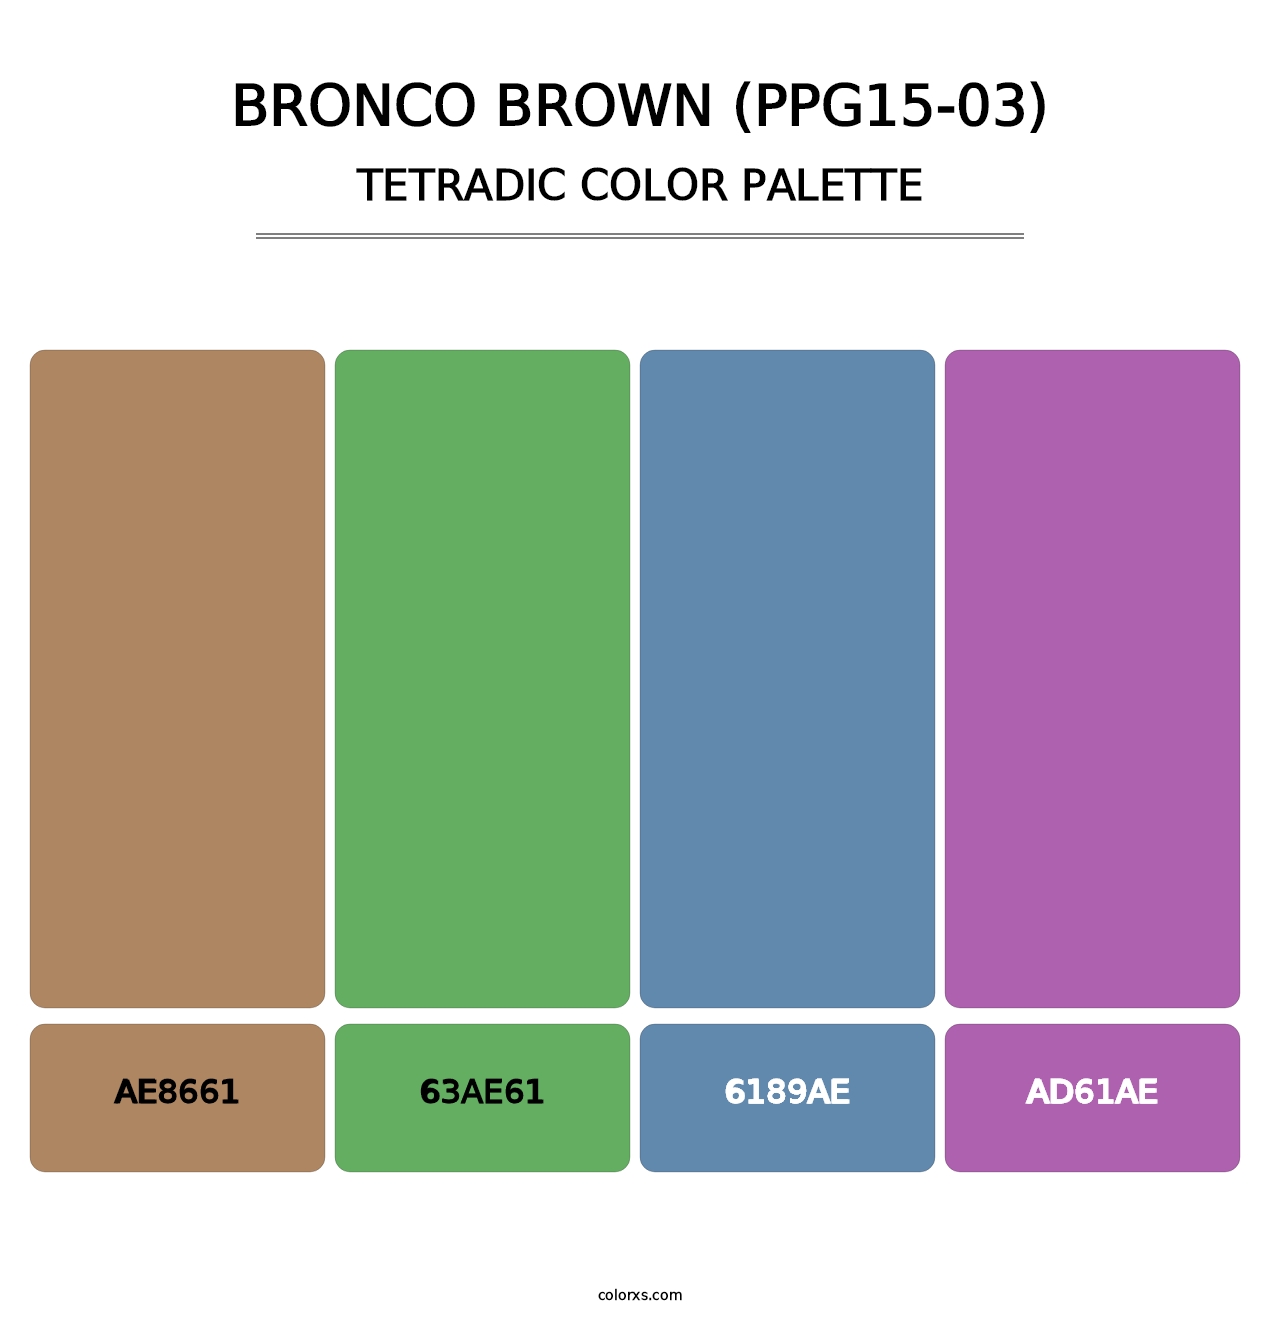 Bronco Brown (PPG15-03) - Tetradic Color Palette